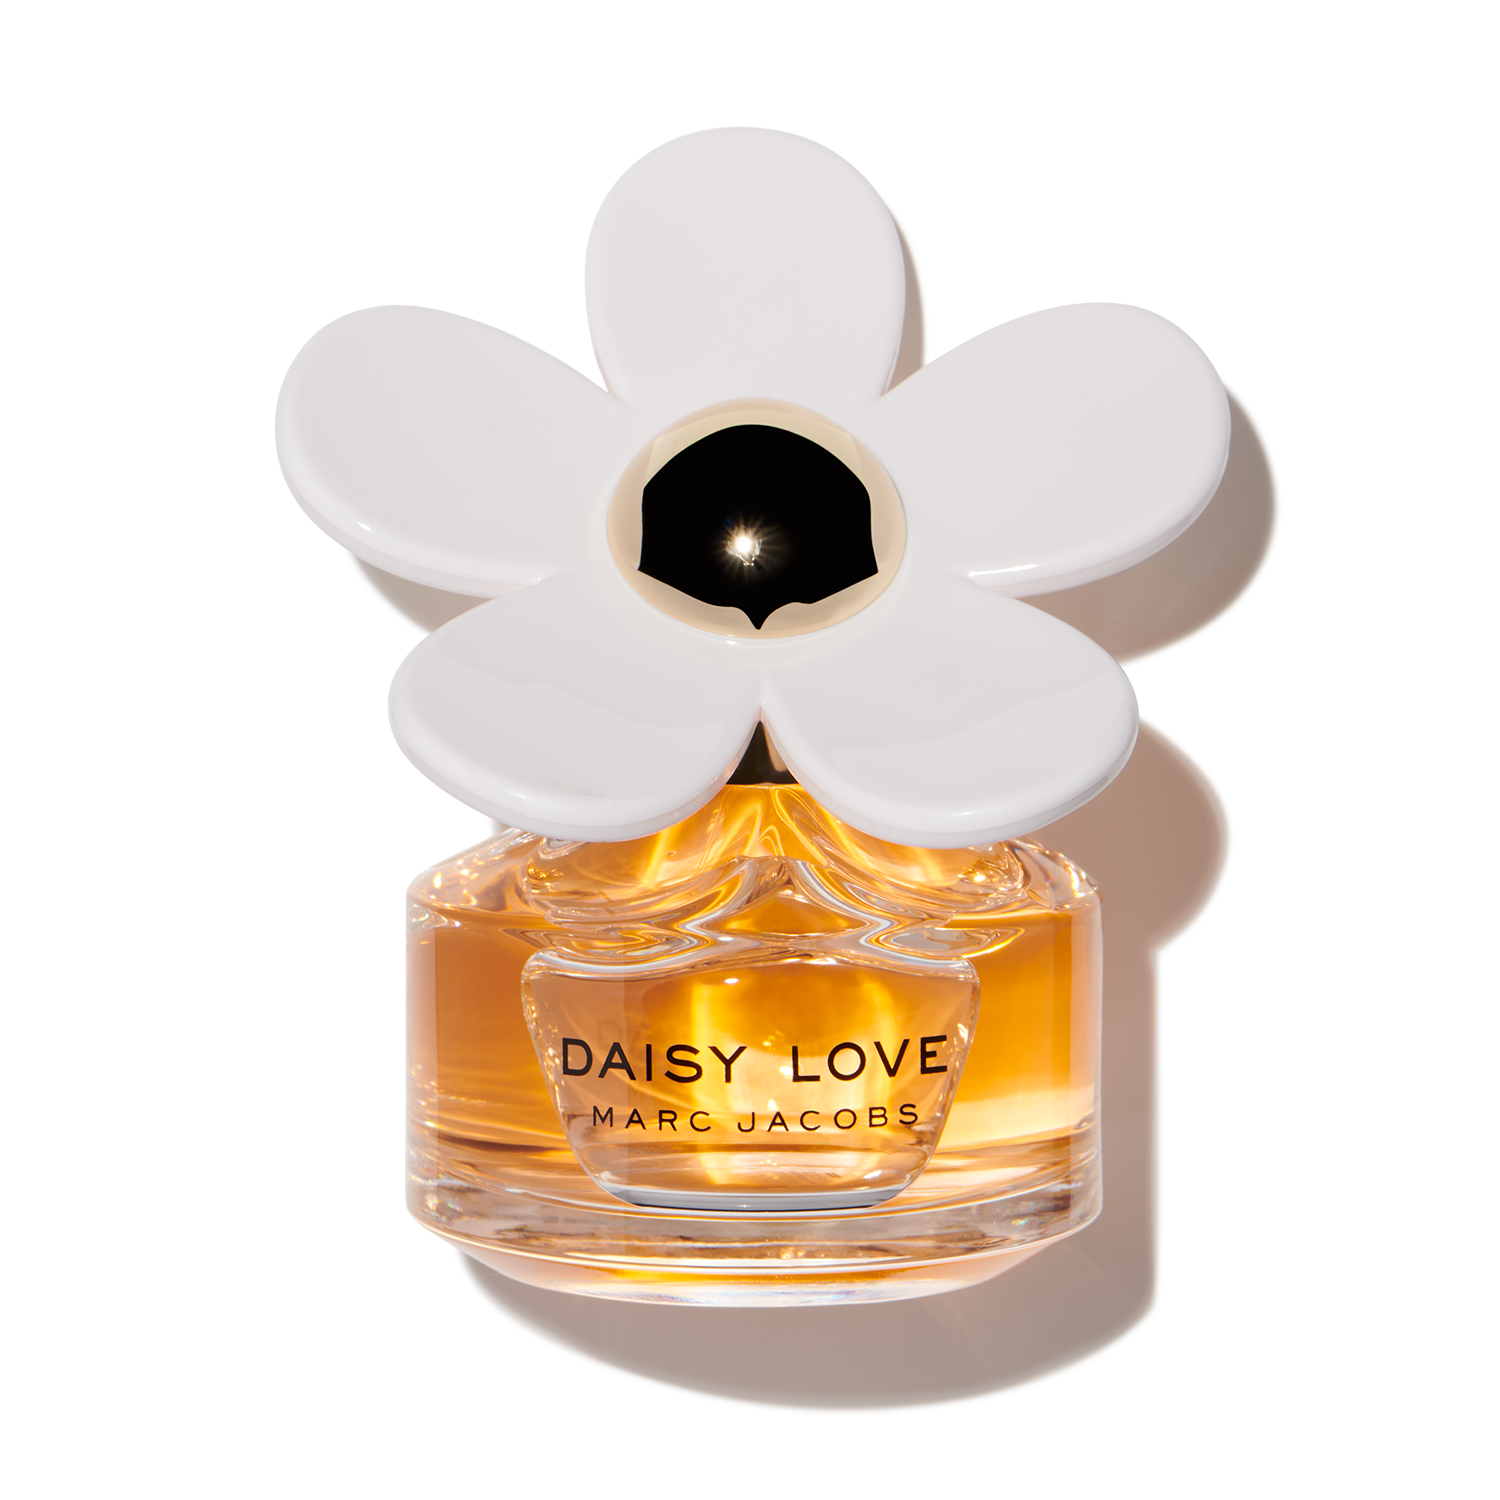 Love perfume at MARC JACOBS Daisy Buy for Scentbird